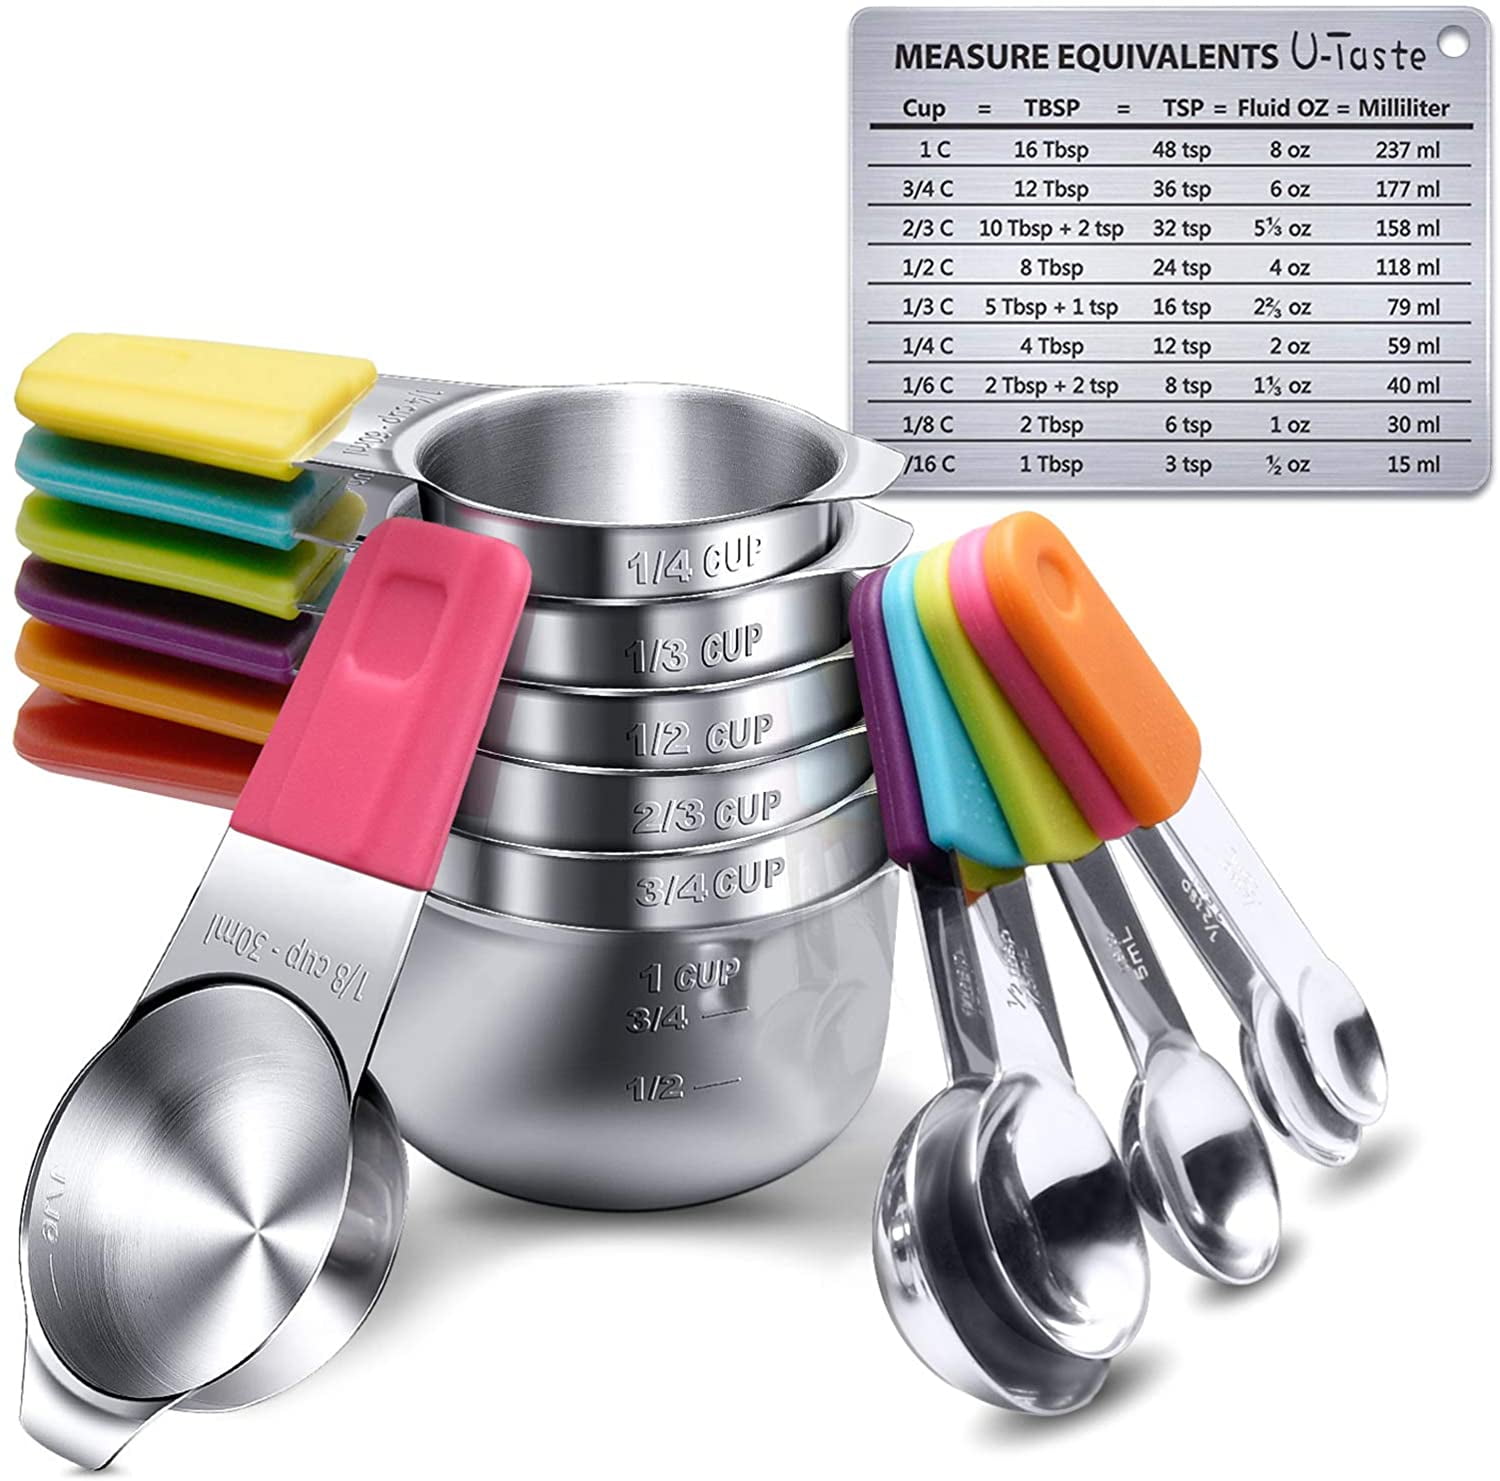 Measuring Cups : U-Taste 18/8 Stainless Steel Measuring Cups and